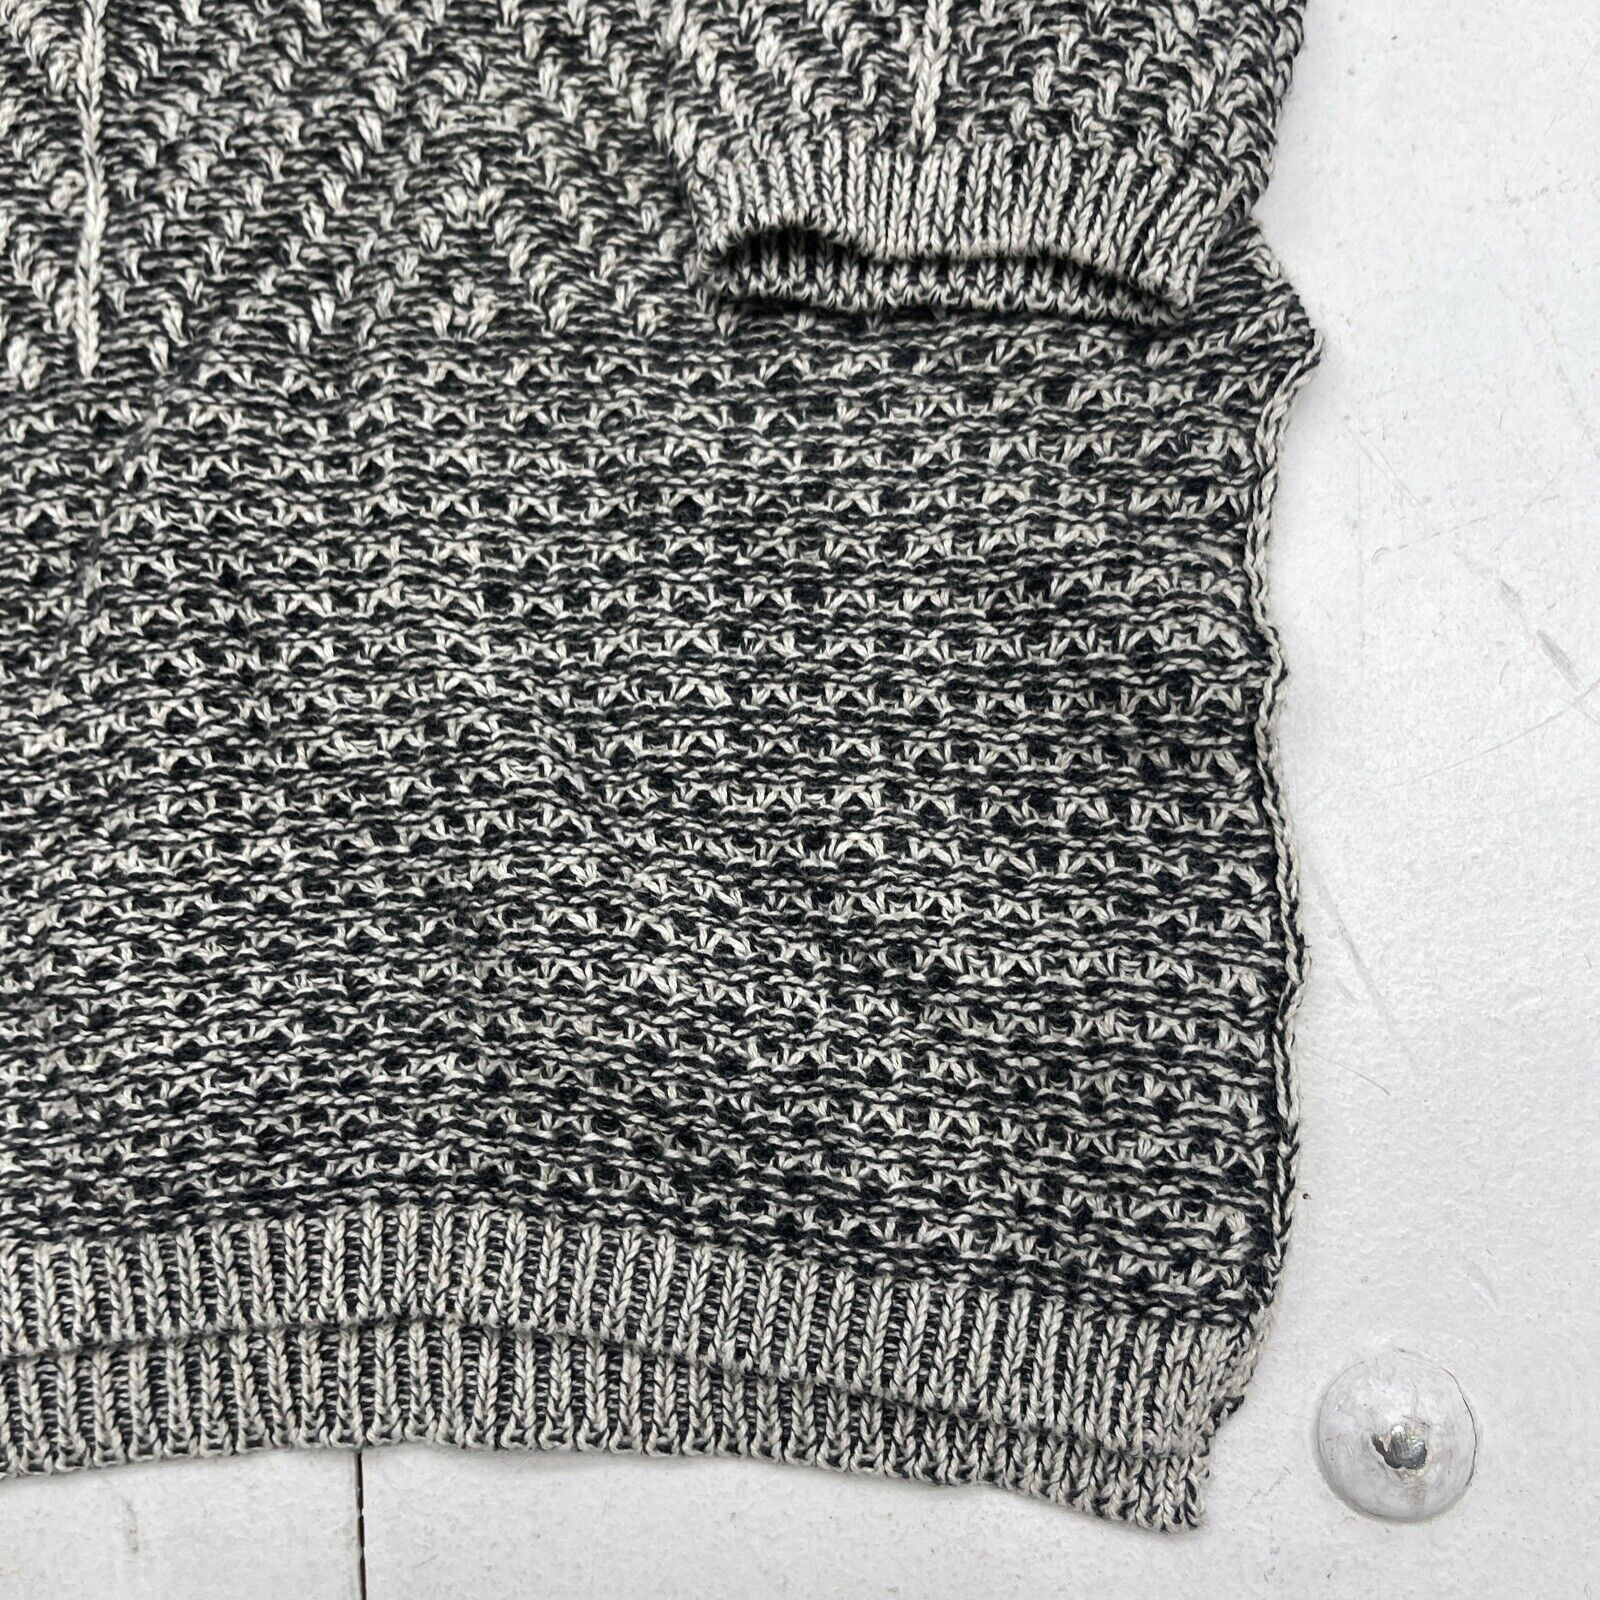 Soft Surroundings Heather Grey Long Sleeve Sweater Women's Size Medium -  beyond exchange